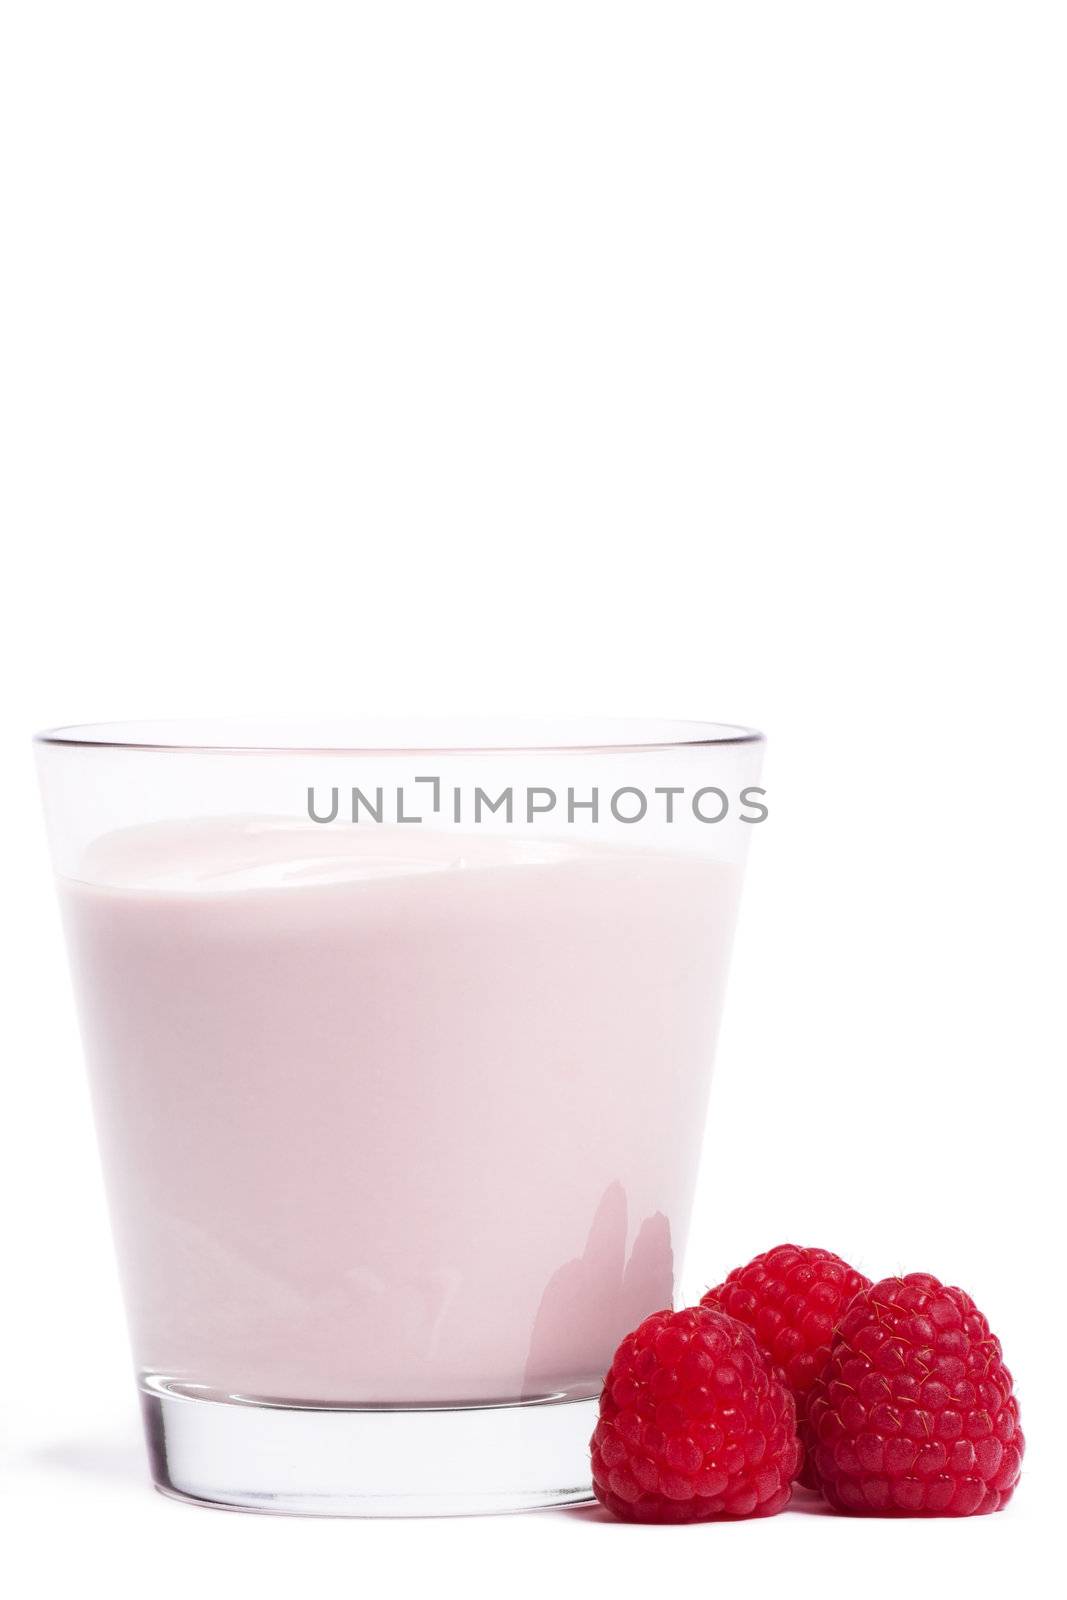 some raspberries near a milkshake by RobStark